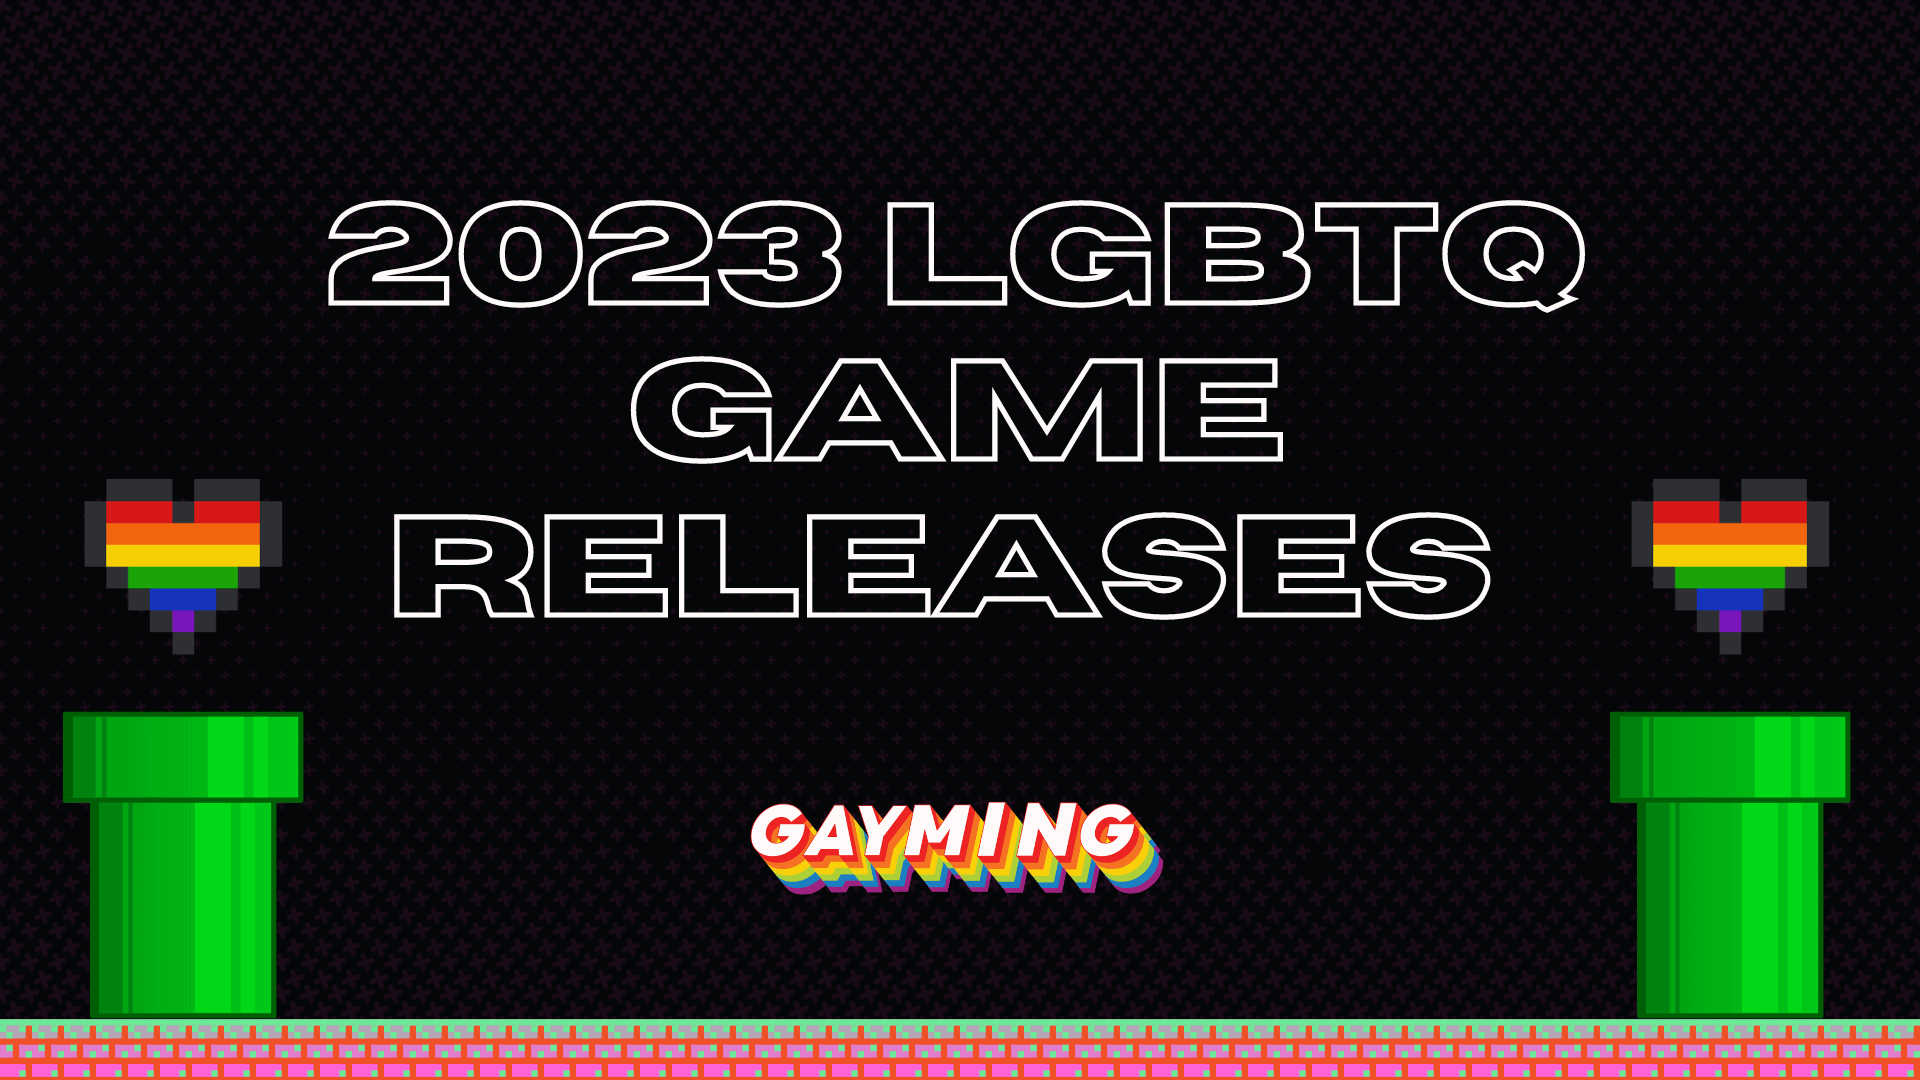 Gayme On! – LGBT NETWORK